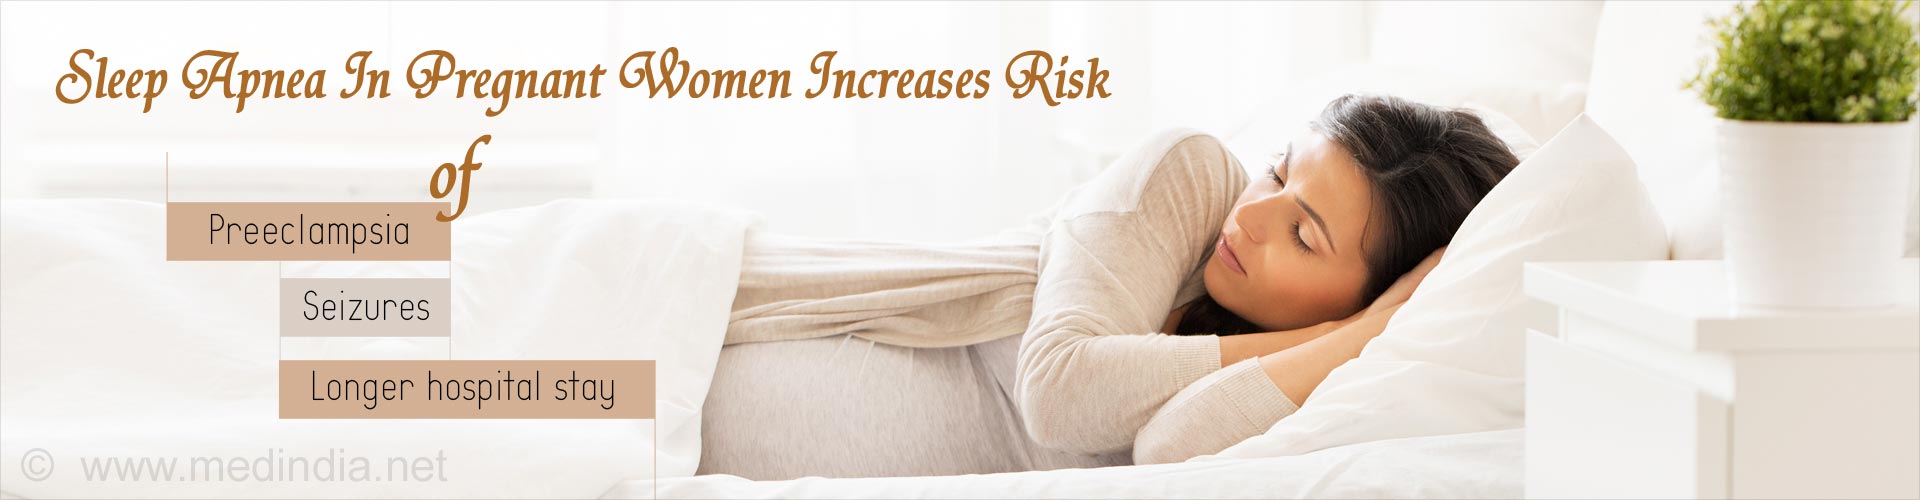 sleep apnea in prgenant women increases risk of preeclampsia, seizures, longer hospital stay